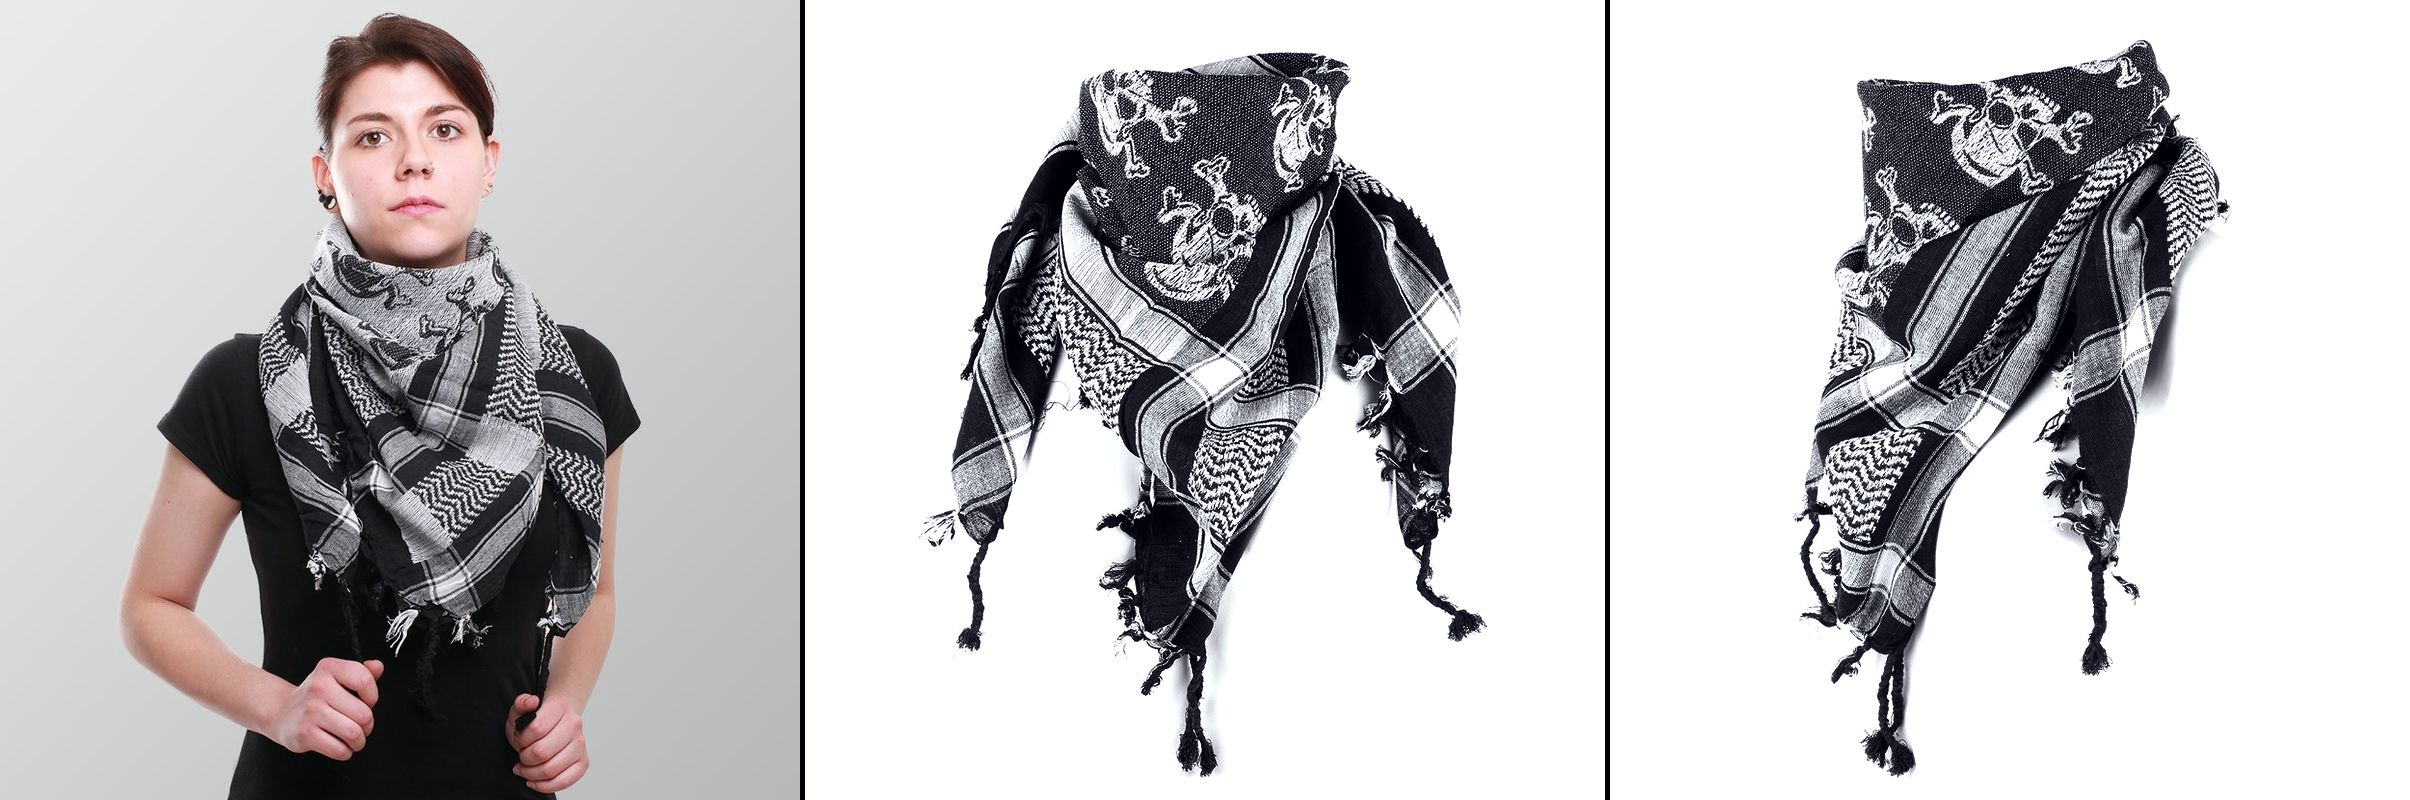 Šátek Arafat Palestina černo-bílý s lebkami